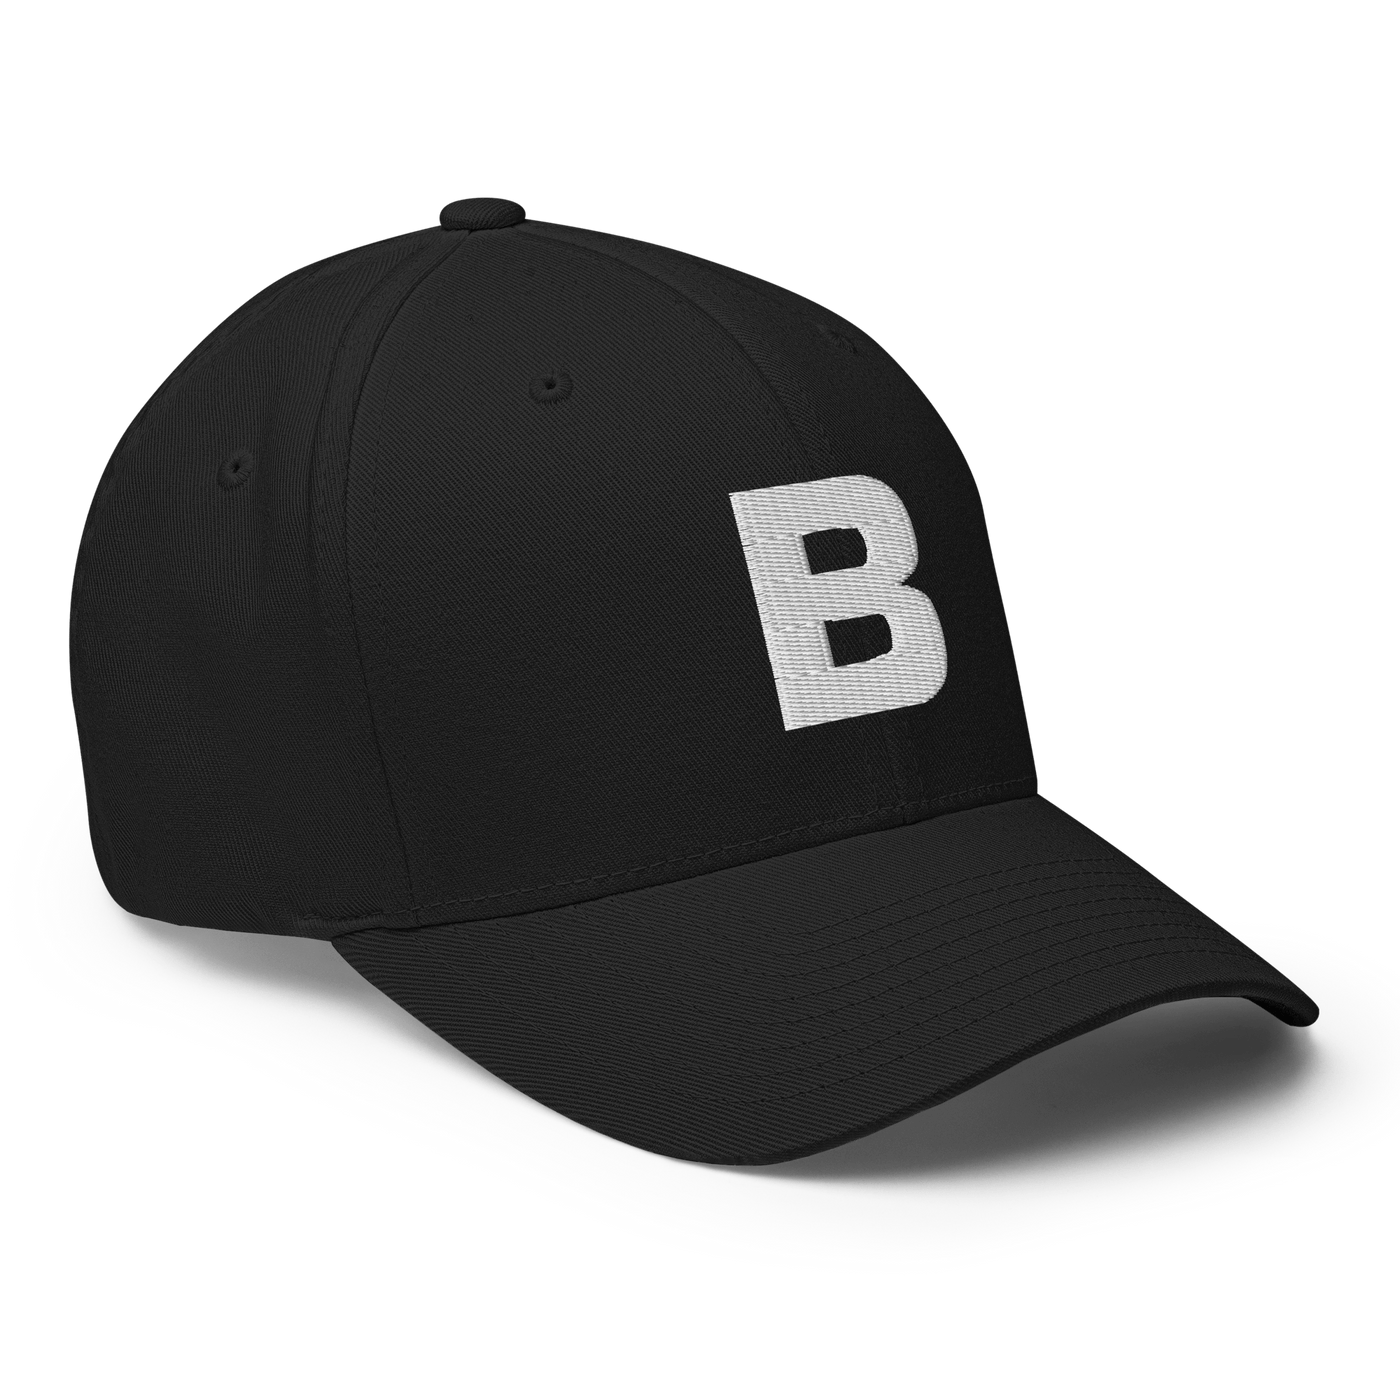 Berlin Flexfit Hat - S/M - - Just Another Cap Store